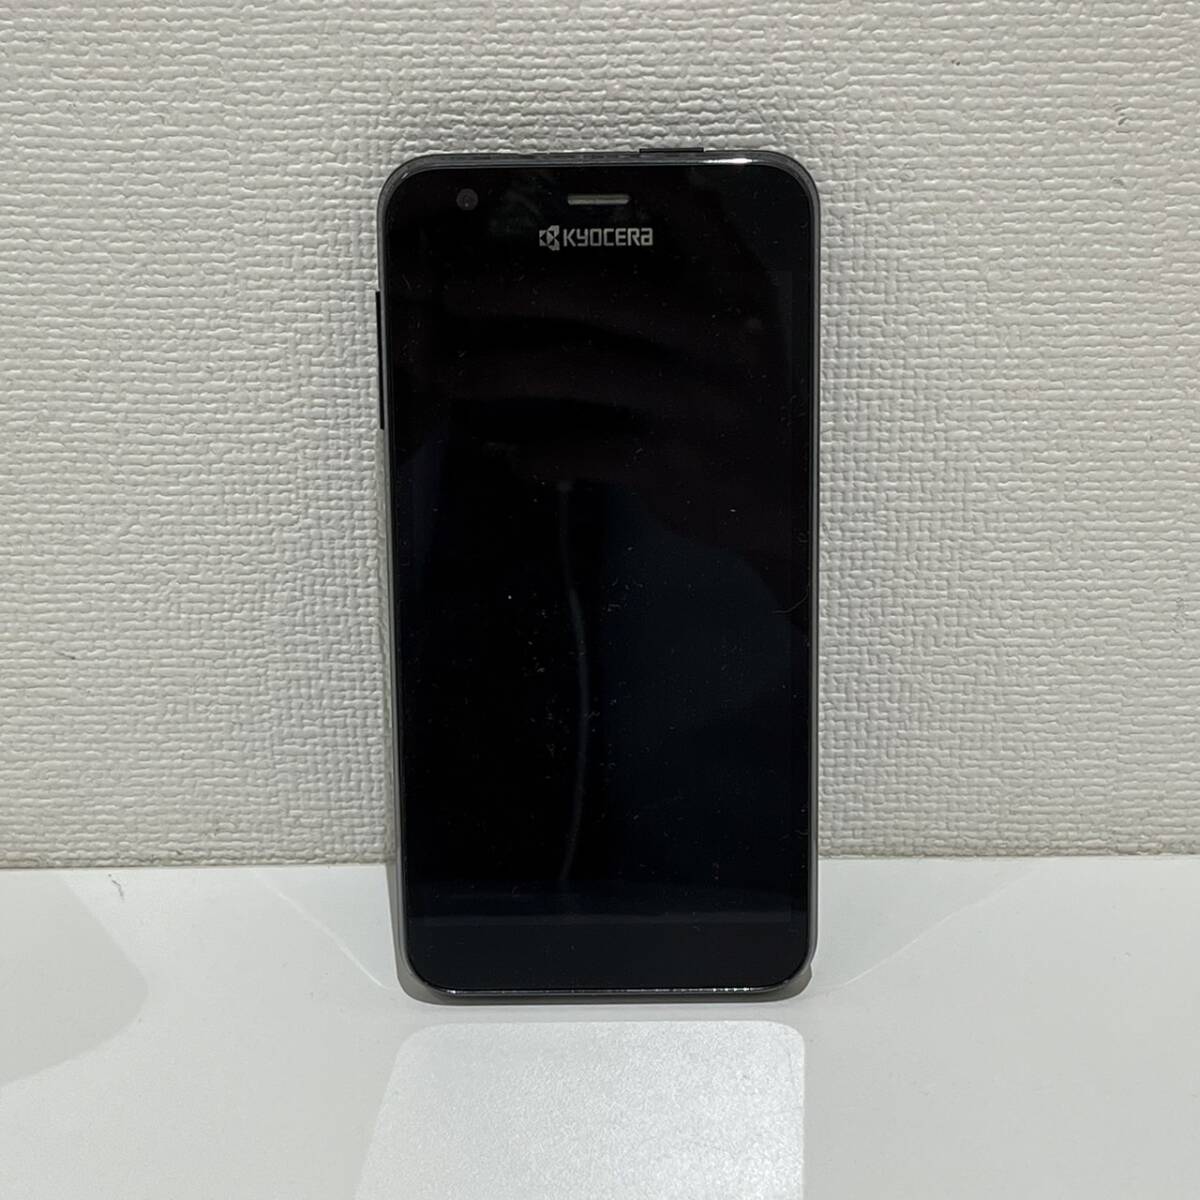 [AMT-10193a]1 иен ~ смартфон galake-. суммировать docomo Galaxy KYOCERA REGZA SoftBank Air 5G мобильный телефон коллекция Old утиль 